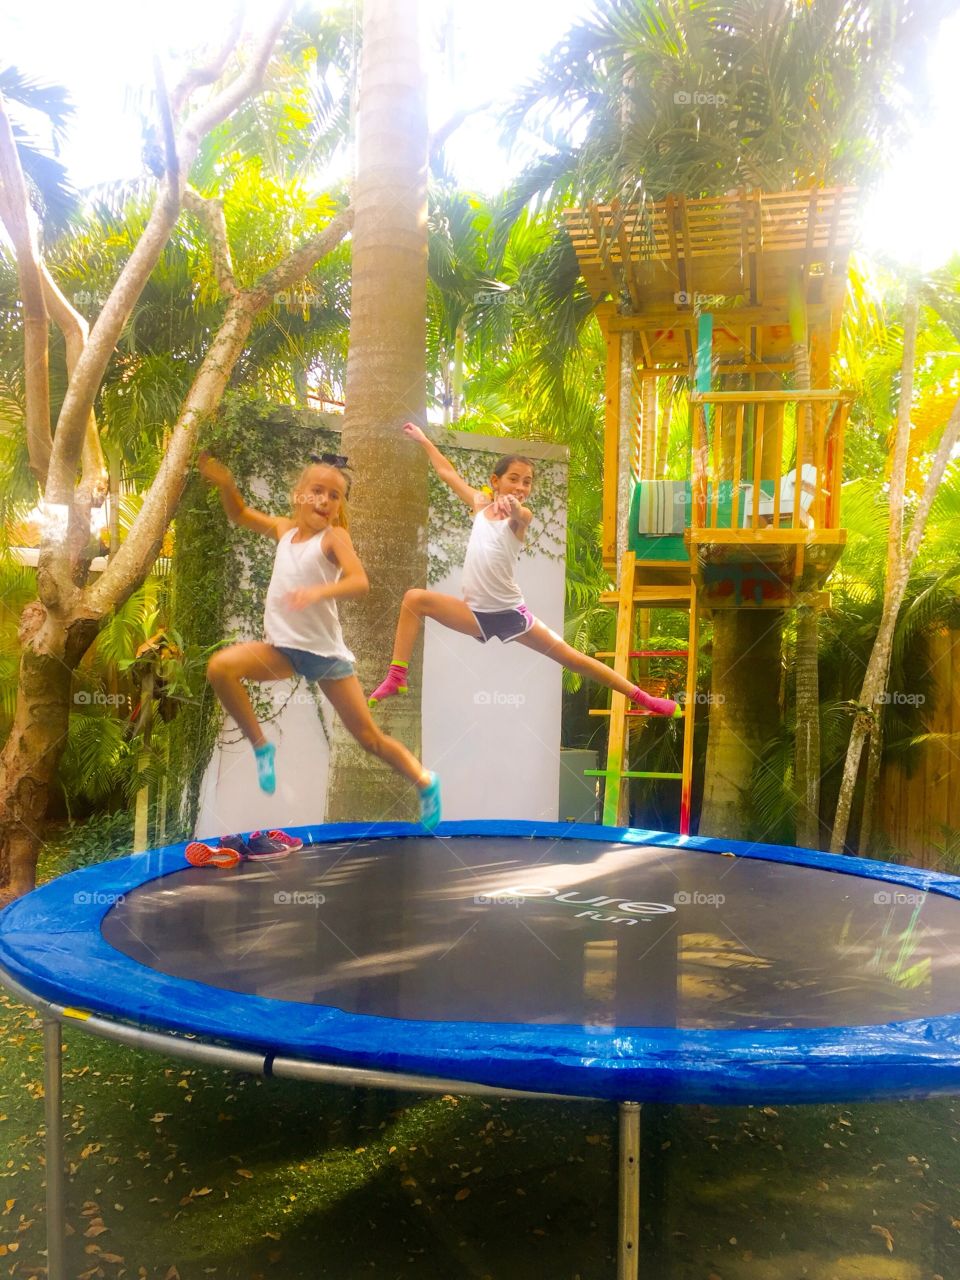 Jumping kids trampoline 